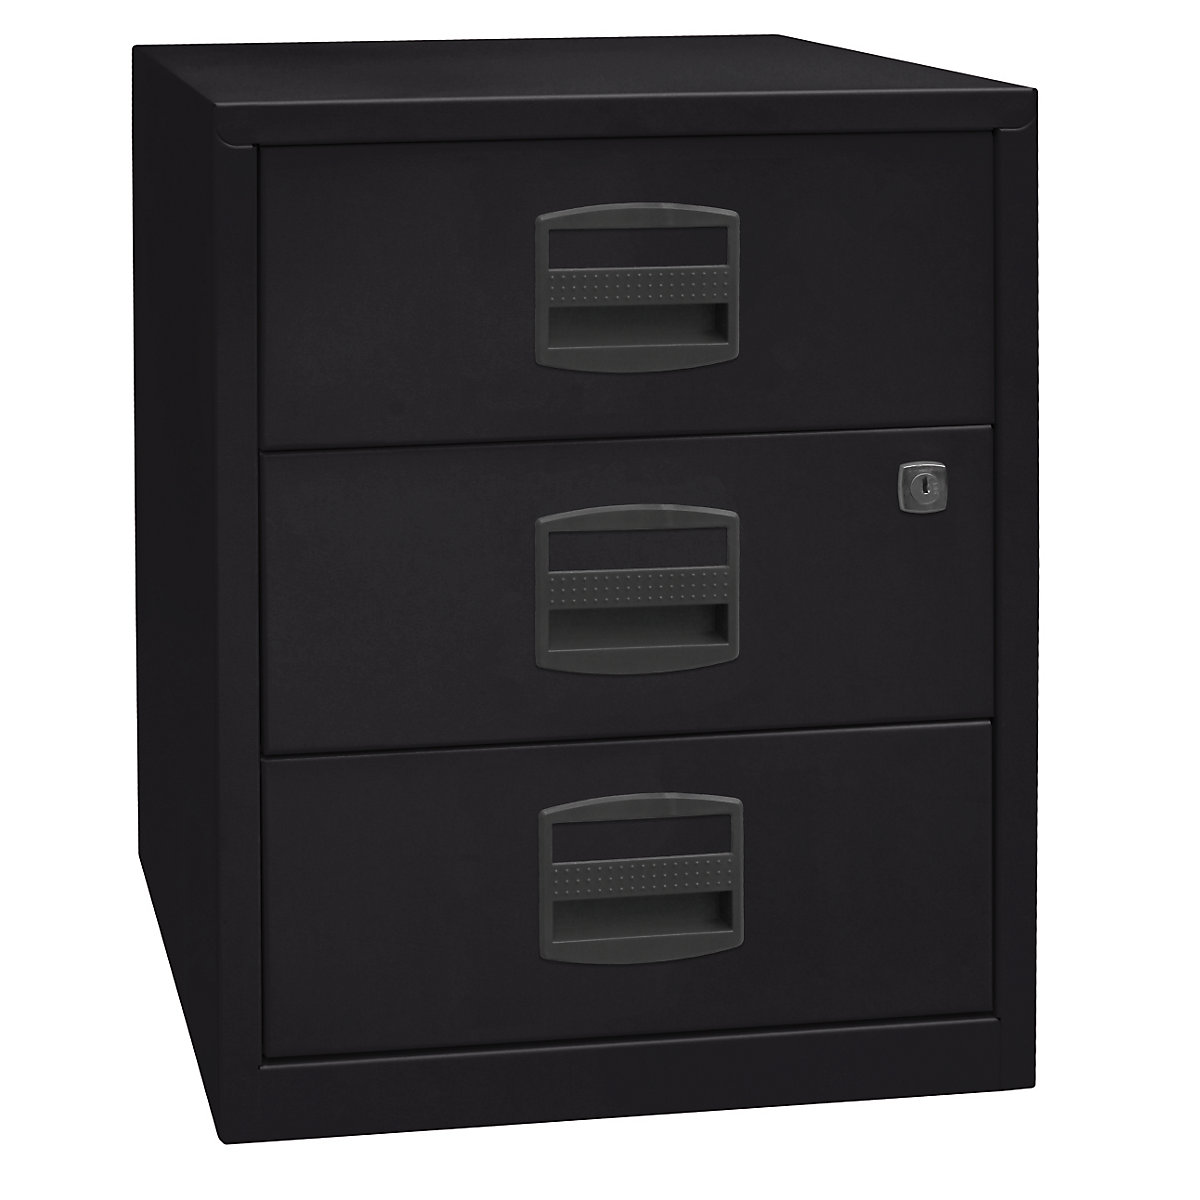 PFA mobile pedestal – BISLEY, 3 universal drawers, black-4